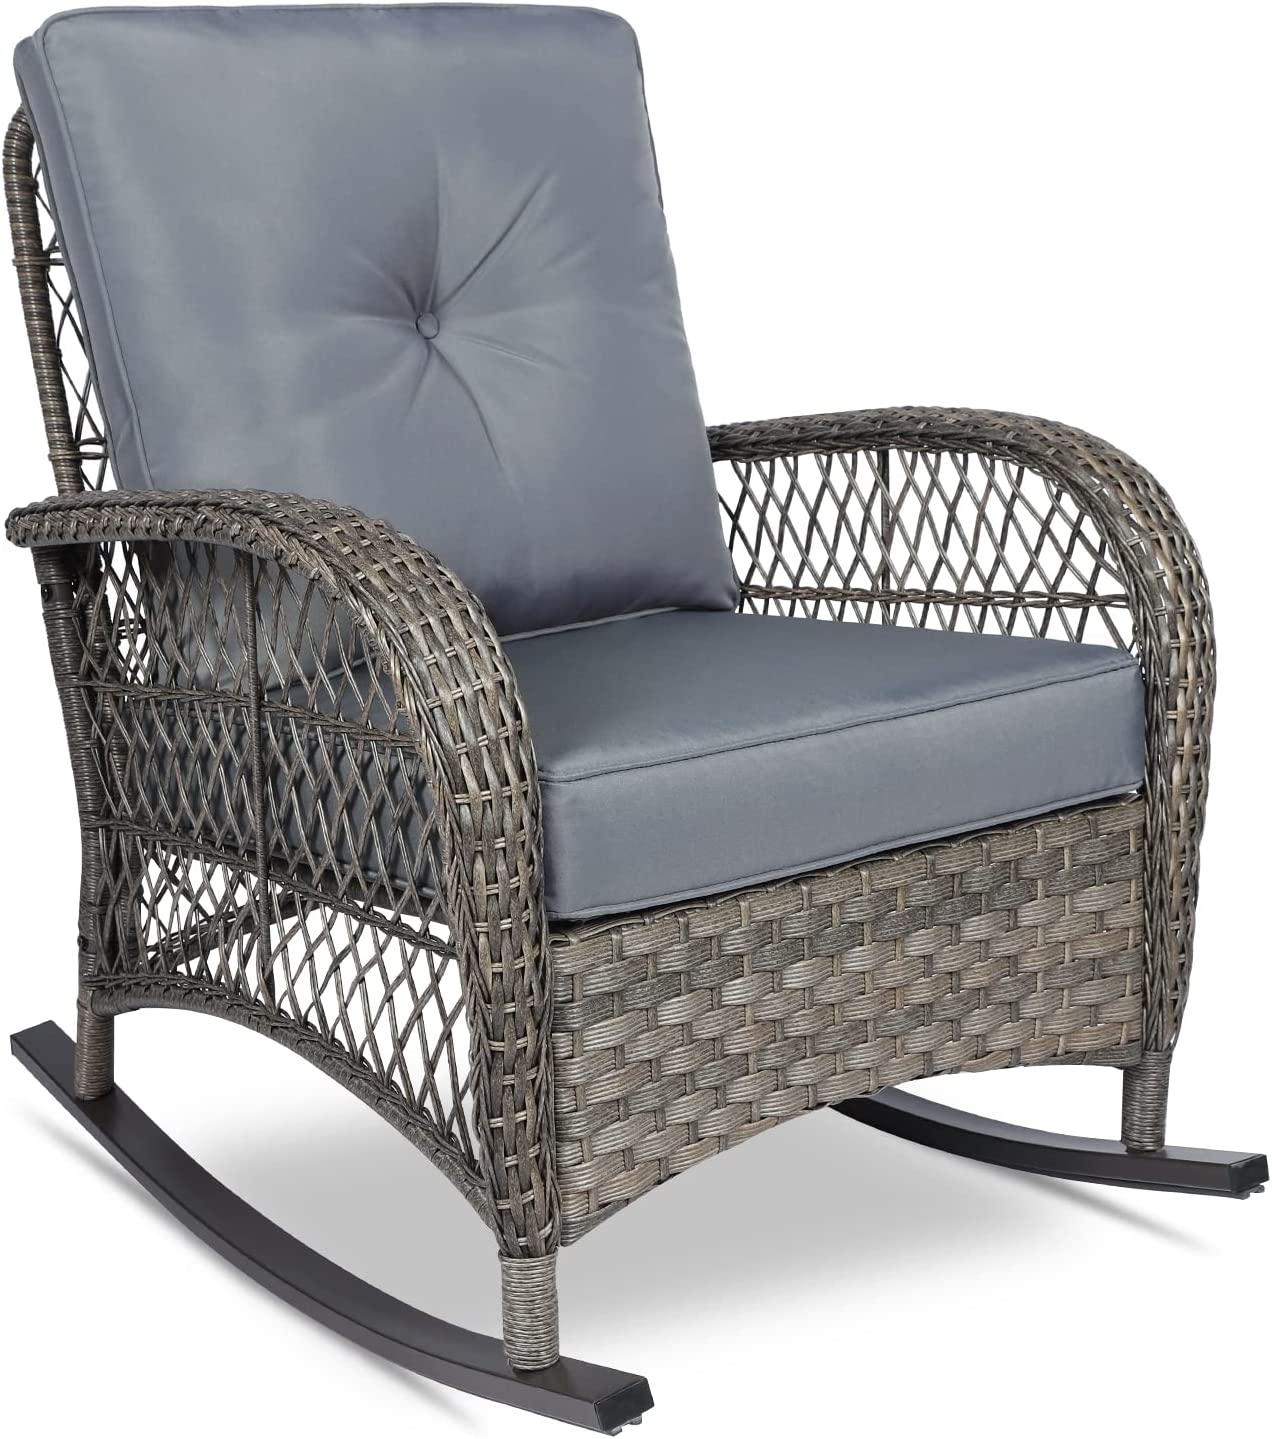 VIVIJASON Outdoor Wicker Rocking Chair, Patio Rattan Rocker Chair with Cushions & Steel Frame, All-Weather Rocking Lawn Wicker Furniture for Garden Backyard Porch (Grey) - image 1 of 7